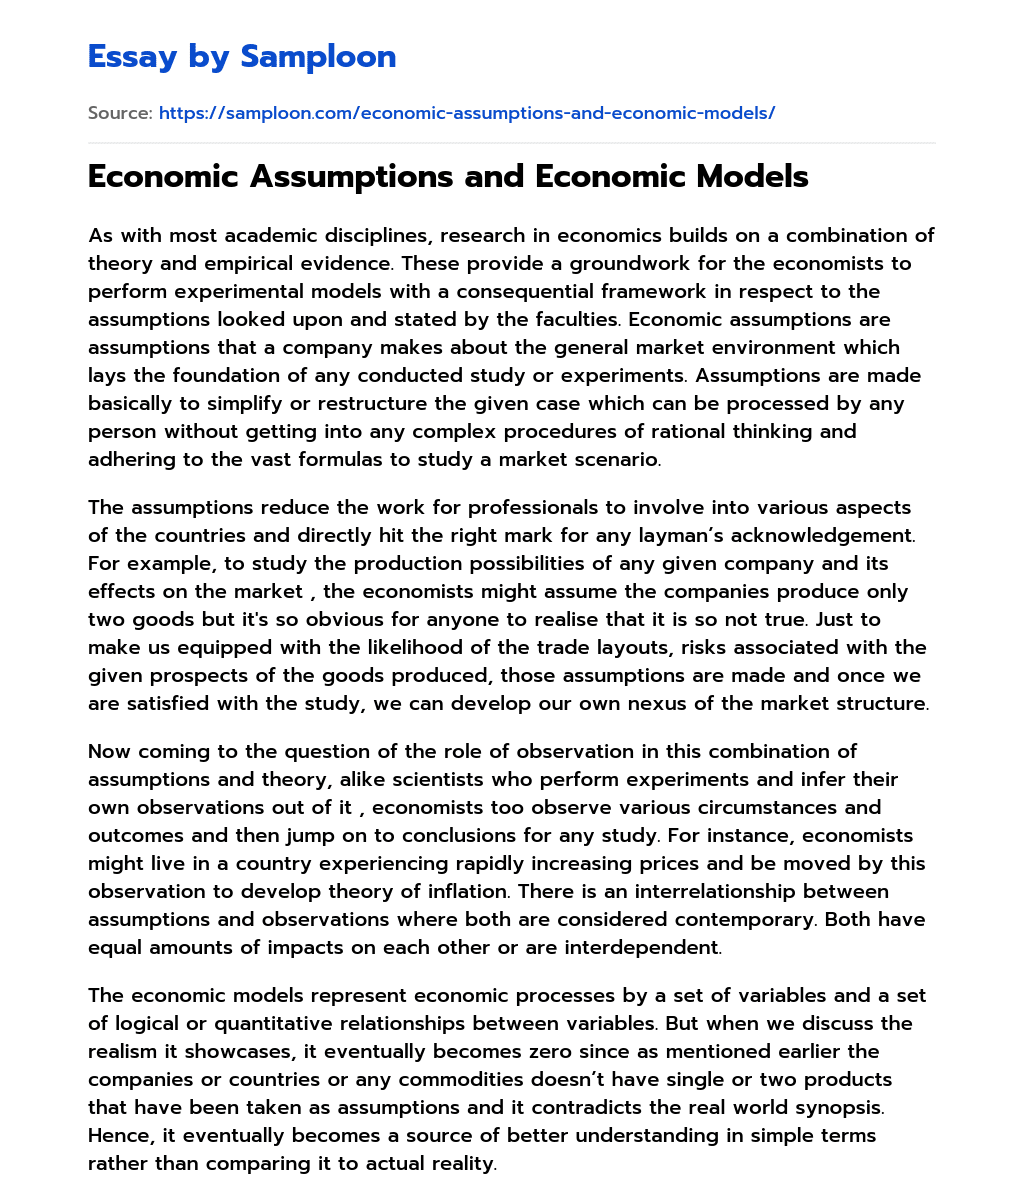 Economic Assumptions and Economic Models essay